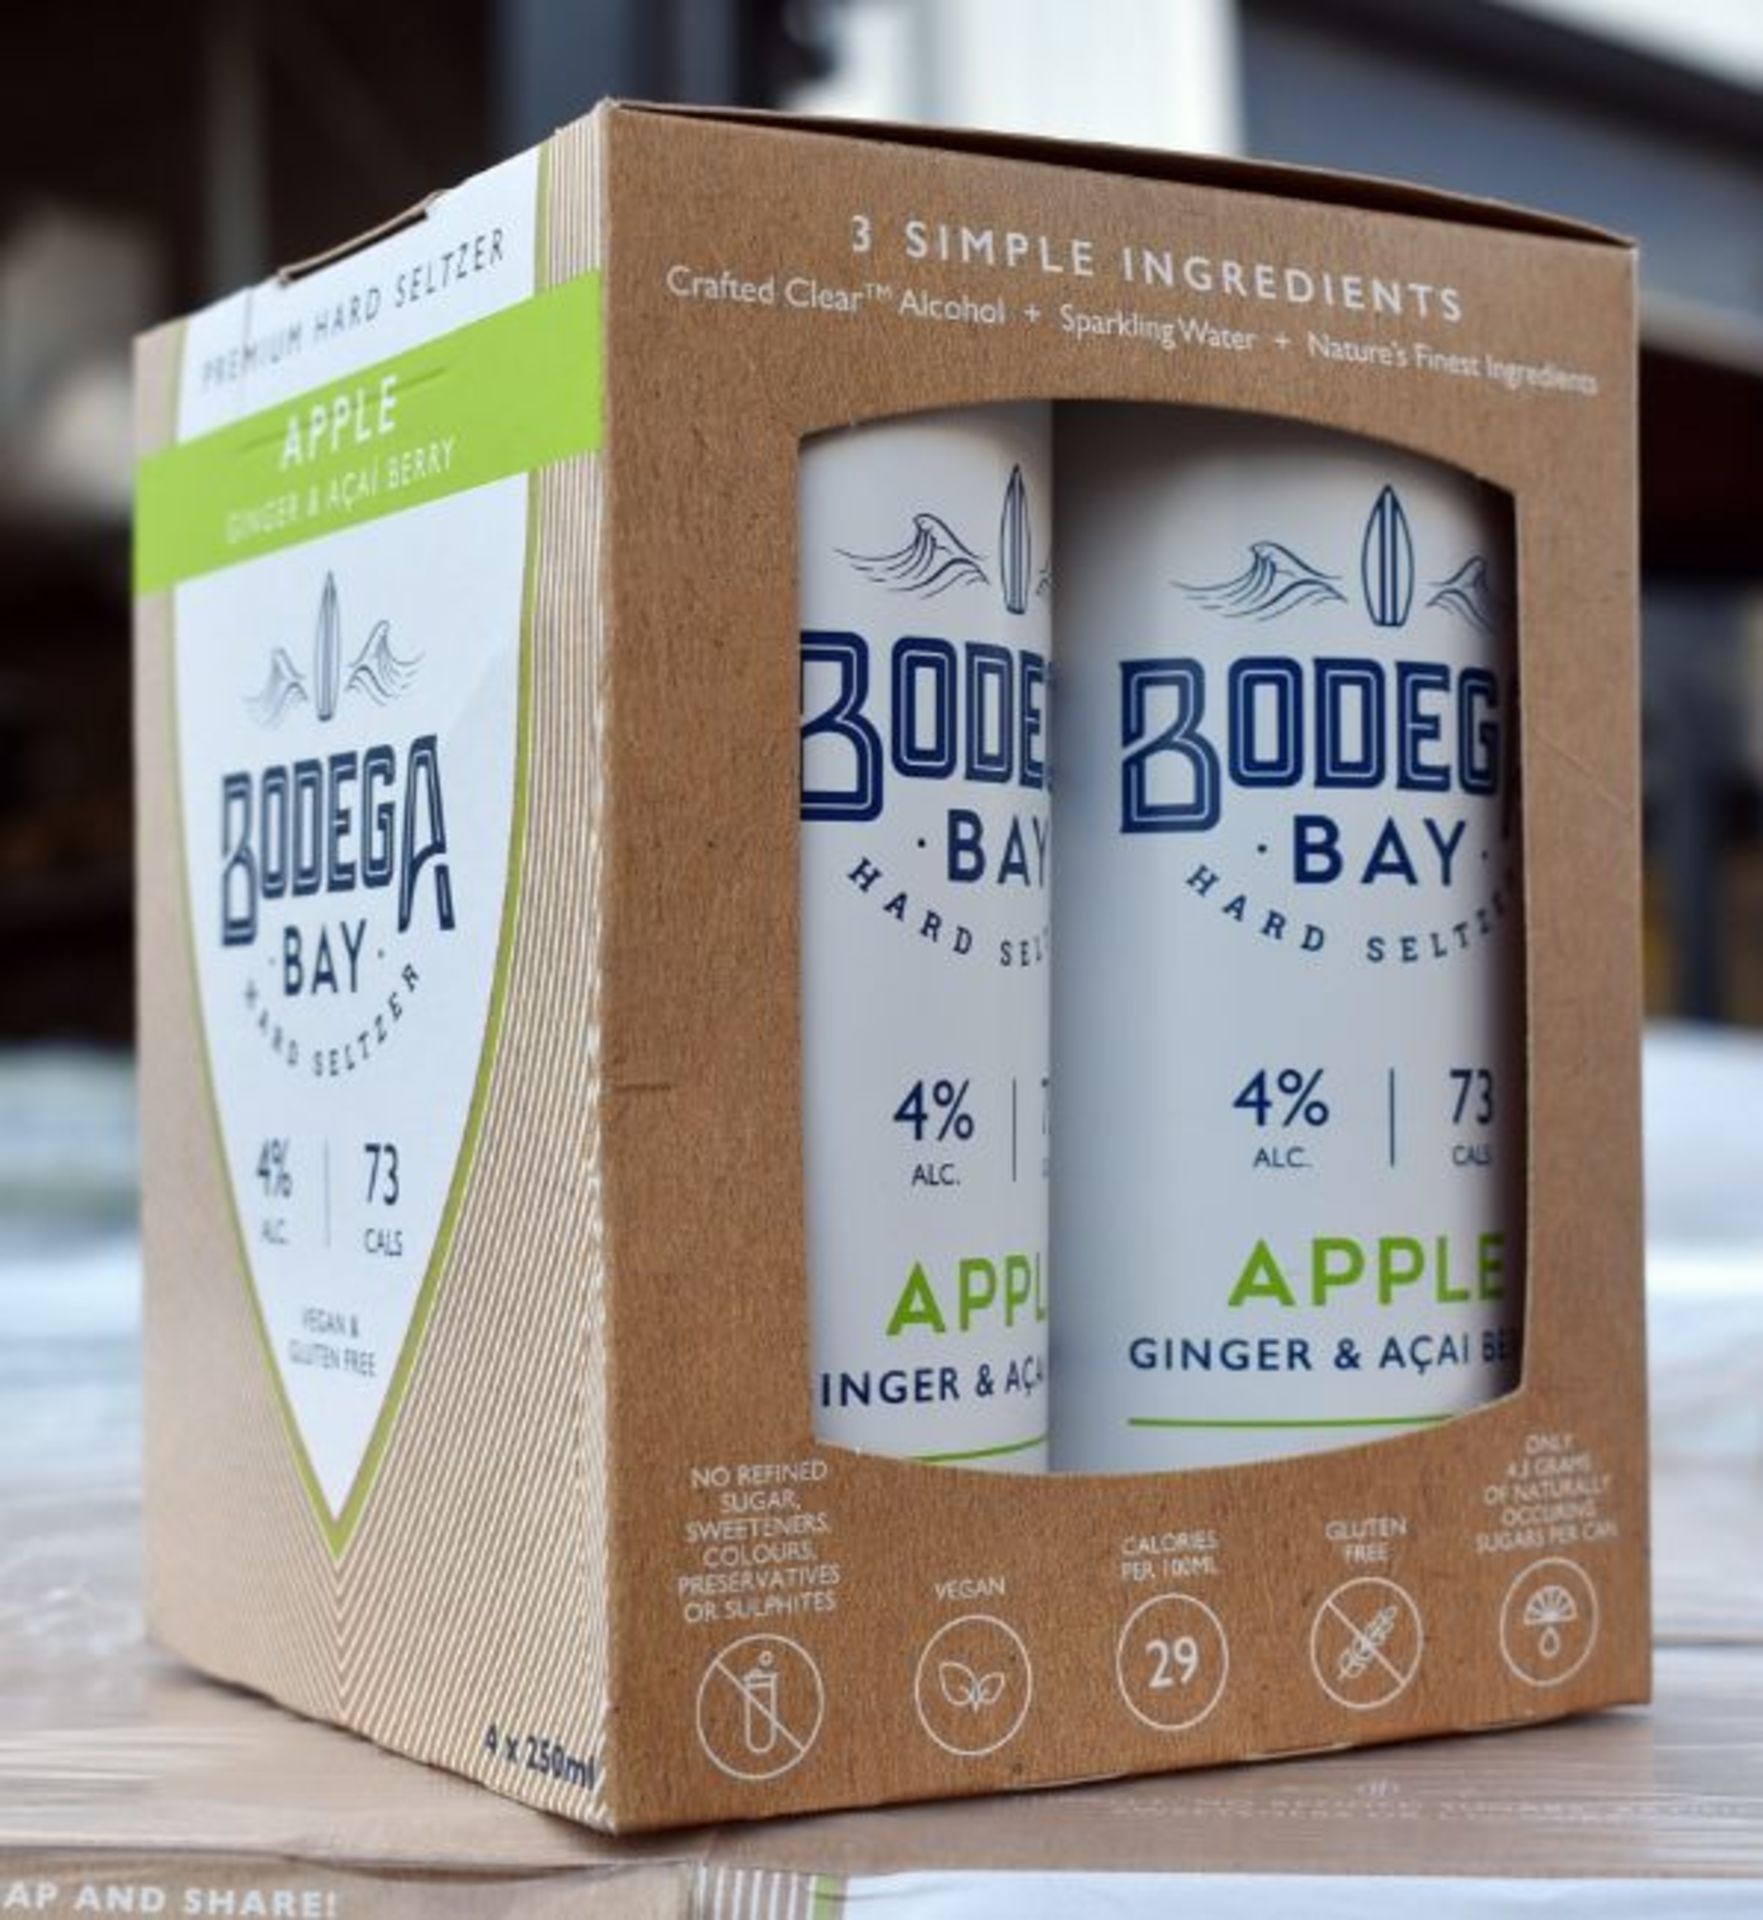 24 x Bodega Bay Hard Seltzer 250ml Alcoholic Sparkling Water Drinks - Apple Ginger & Acai Berry - Image 3 of 9